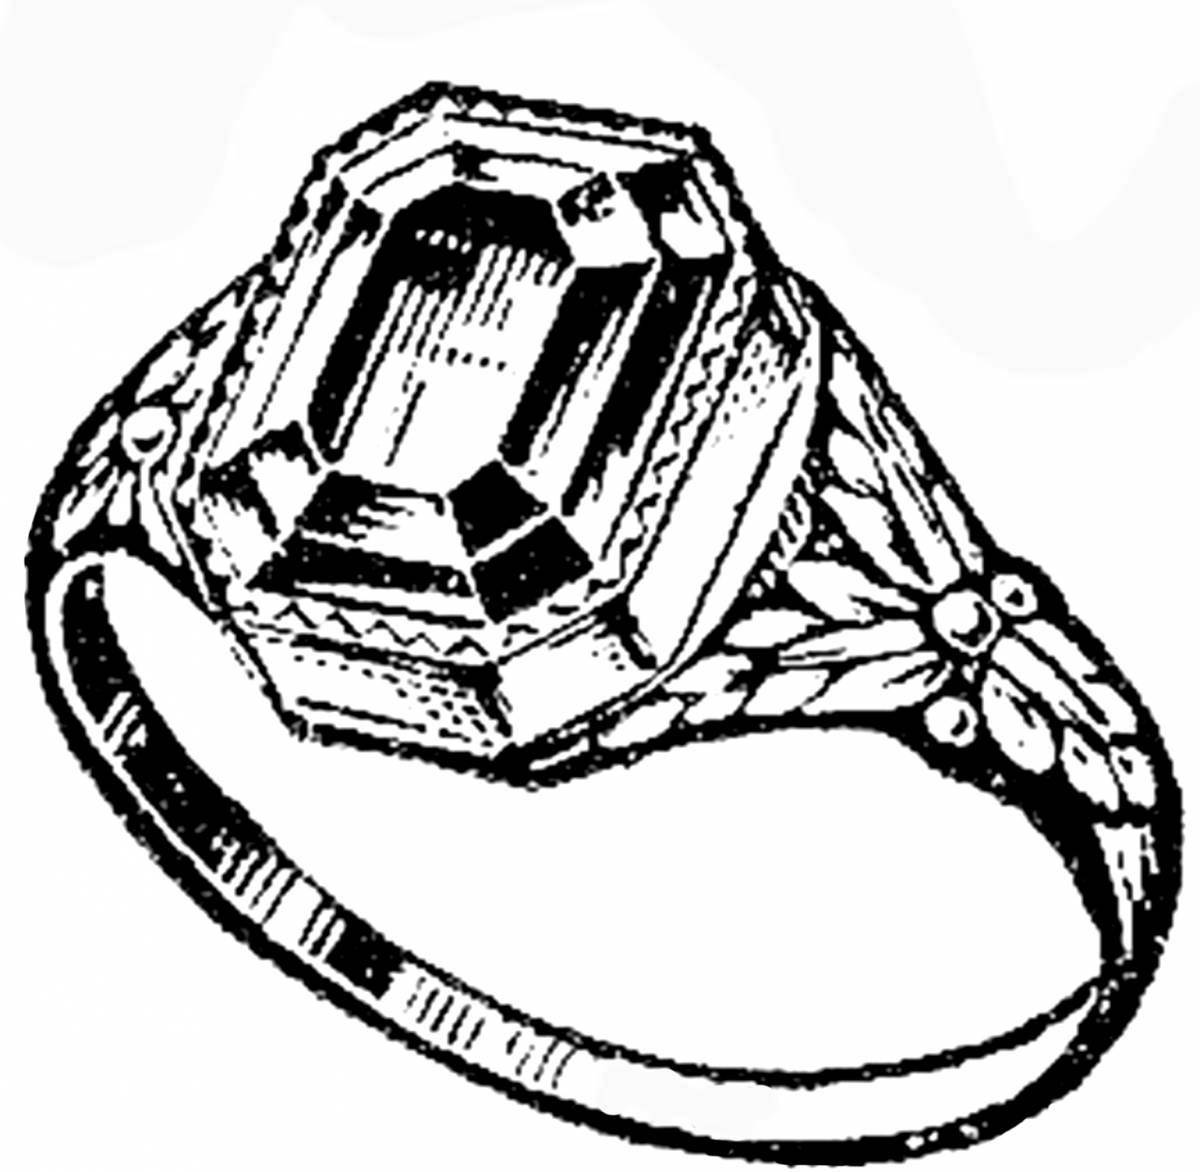 Exquisite stone ring coloring